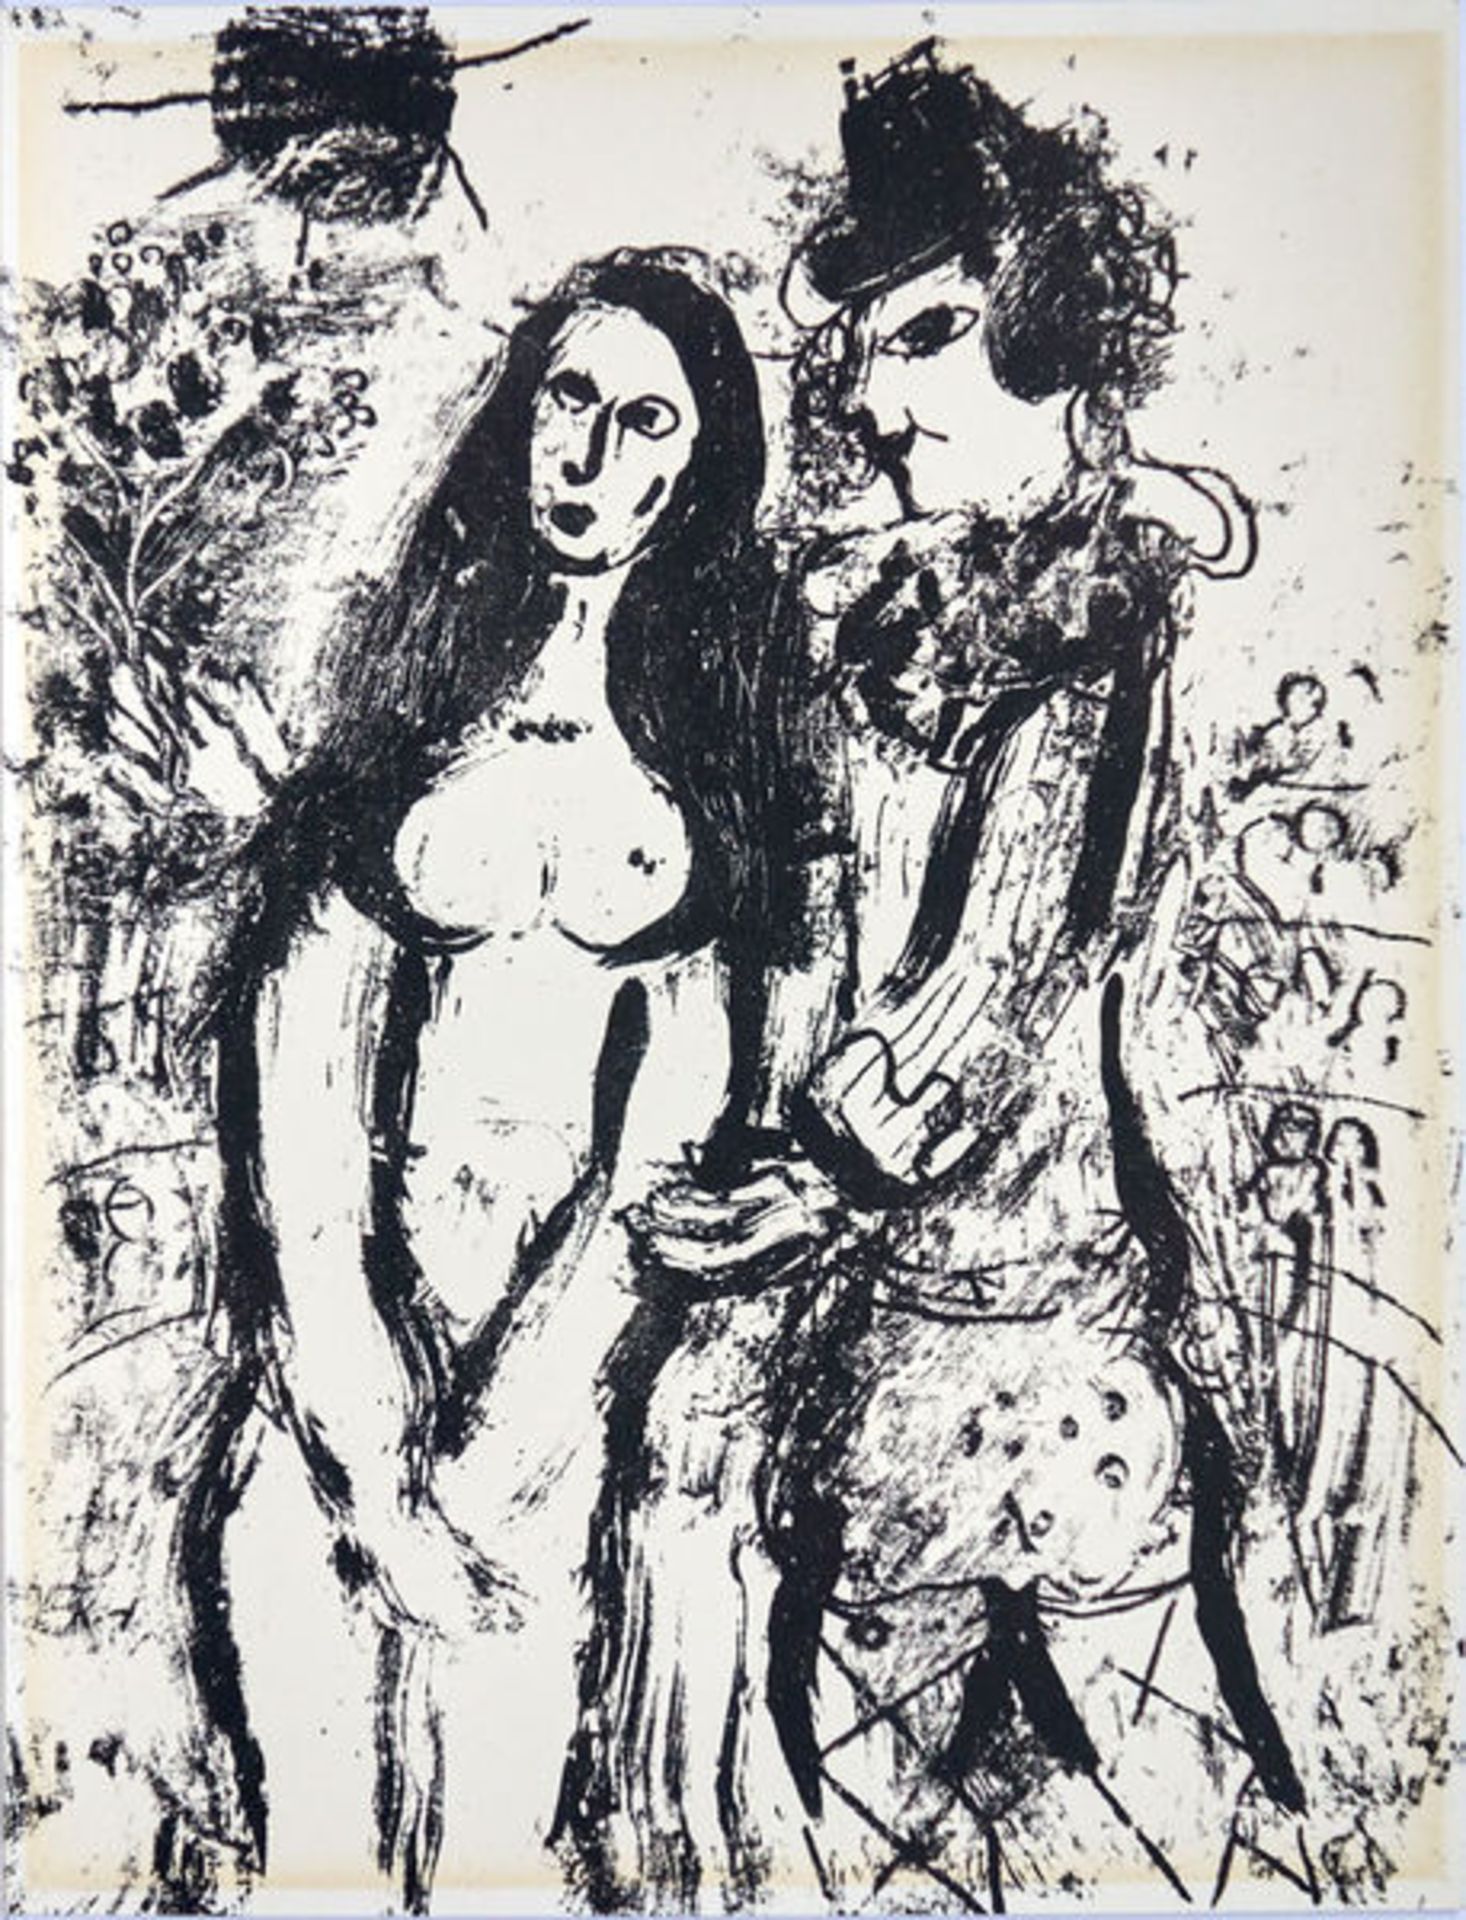 Chagall, Marc Lithographie auf Papier, 32 x 24,5 cm Der verliebte Clown (1963) Mourlot 394. Aus